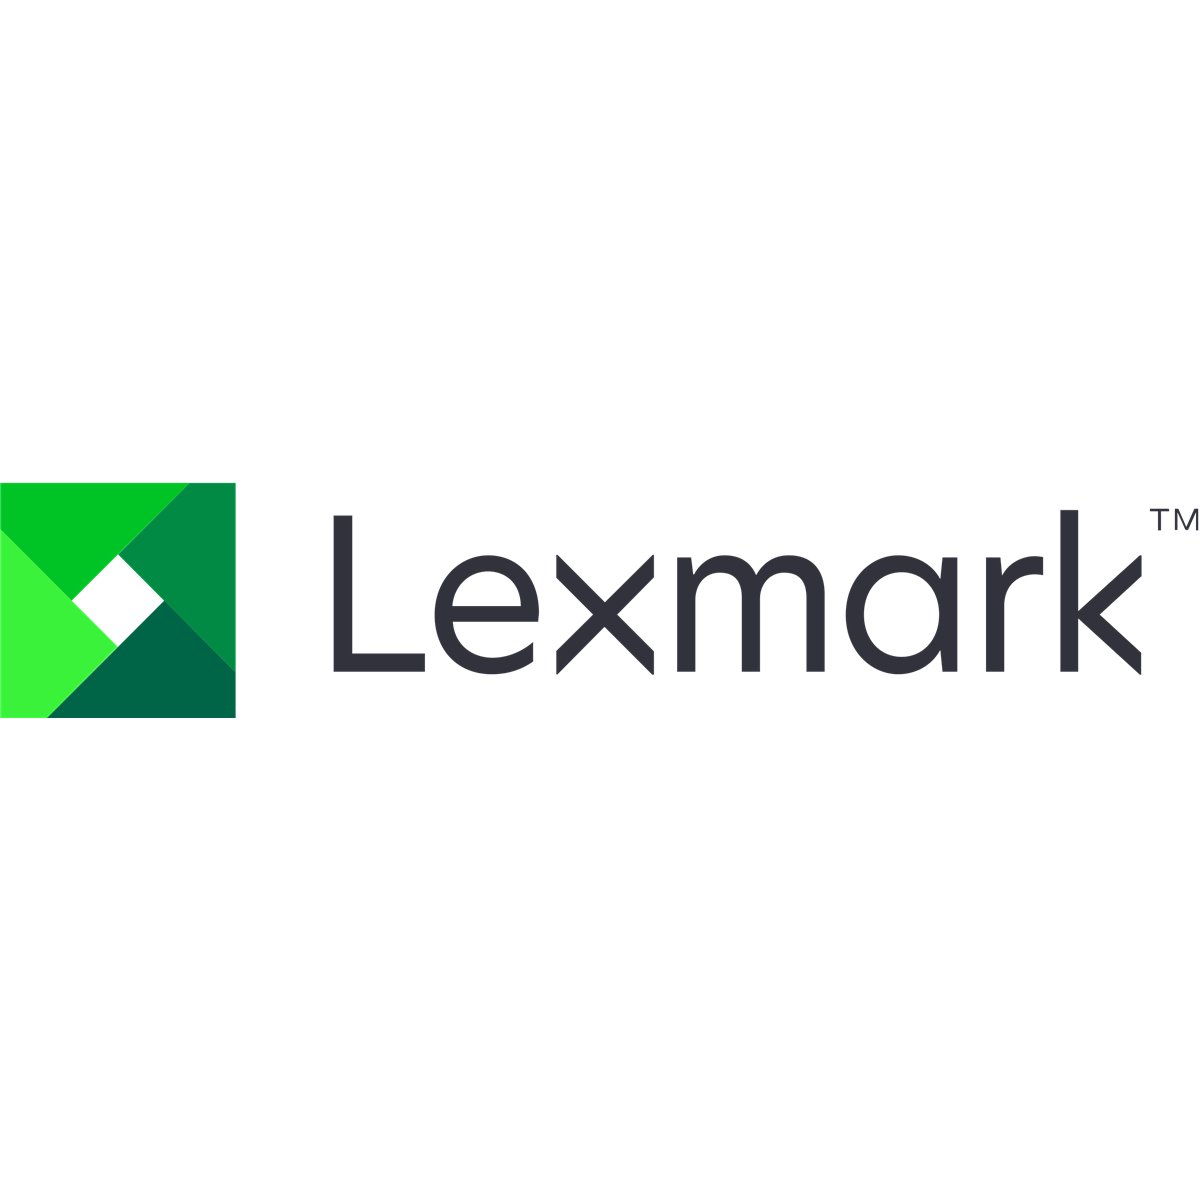 Lexmark Cables Engine Fcc